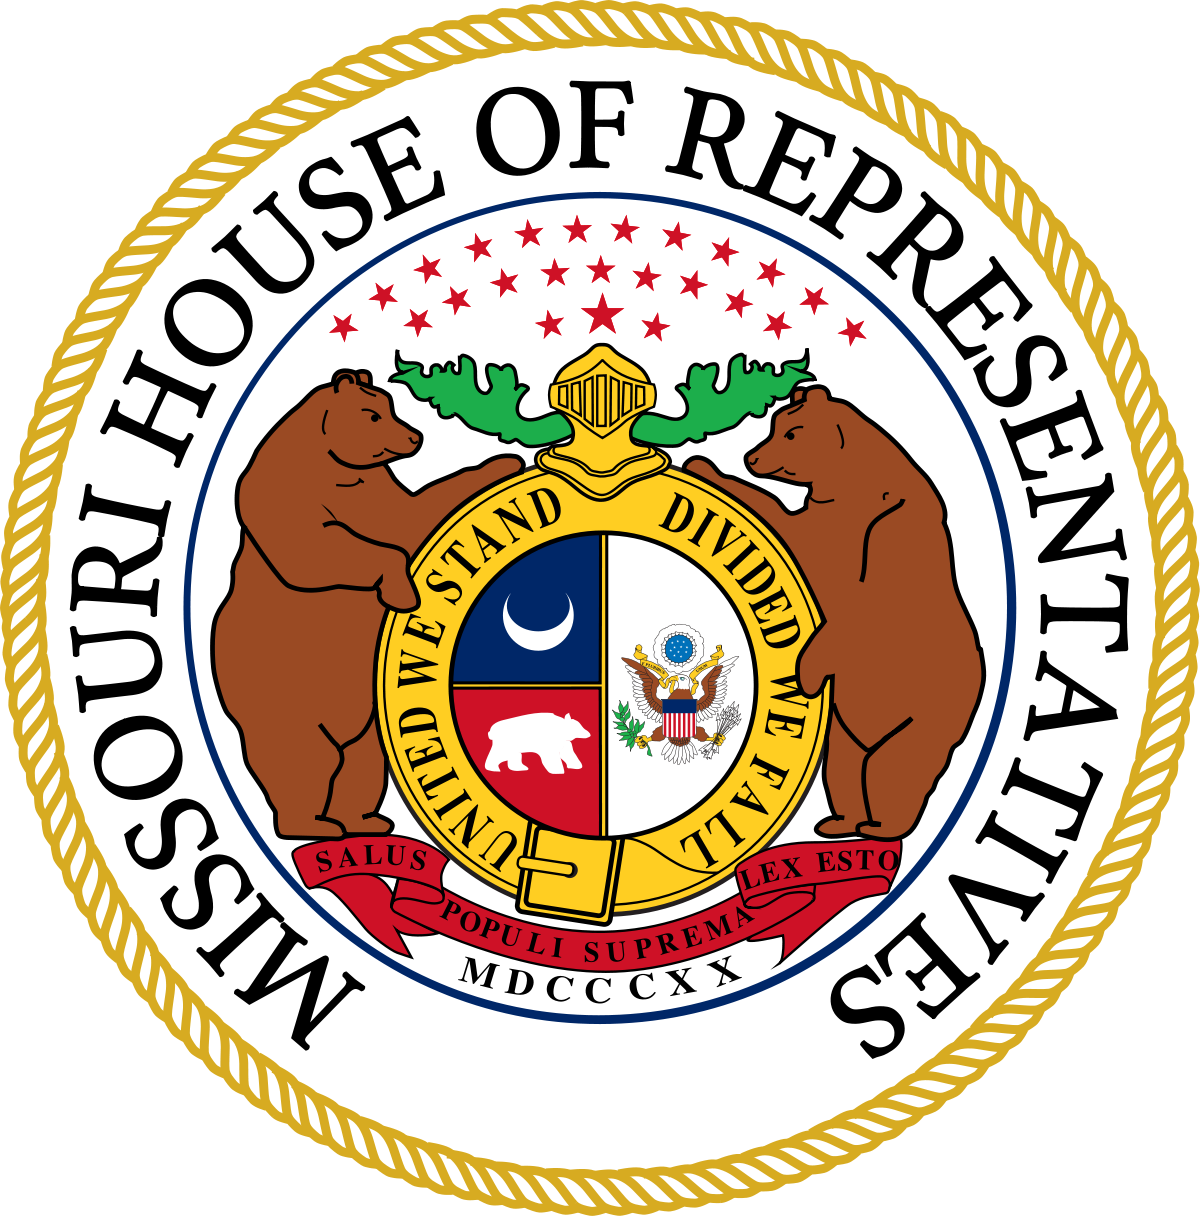 Missouri House of Representatives seal